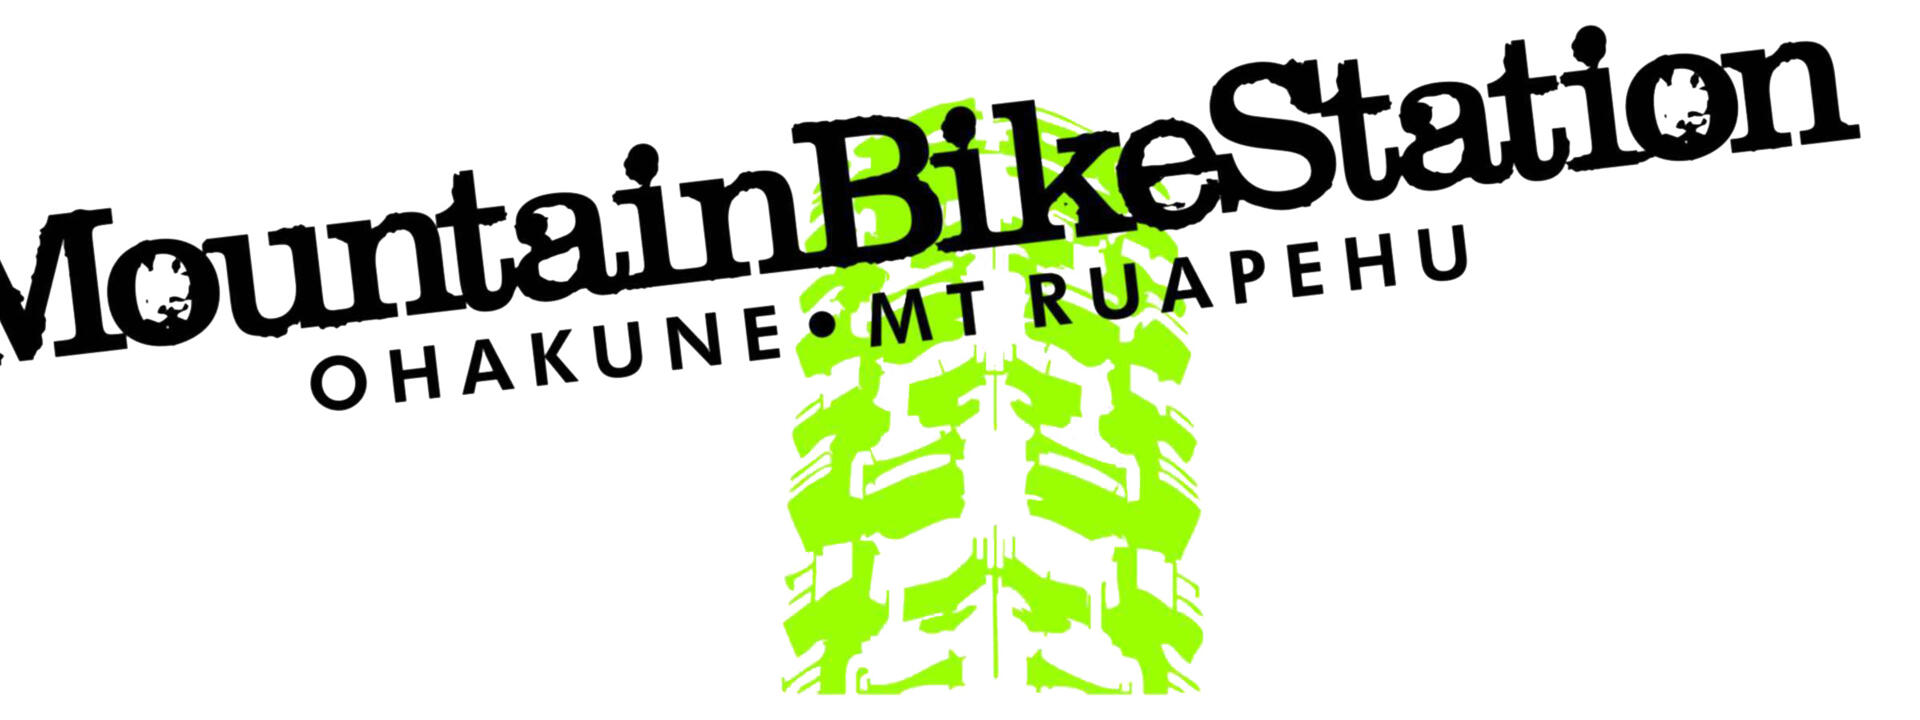 Logo: Mountain Bike Station